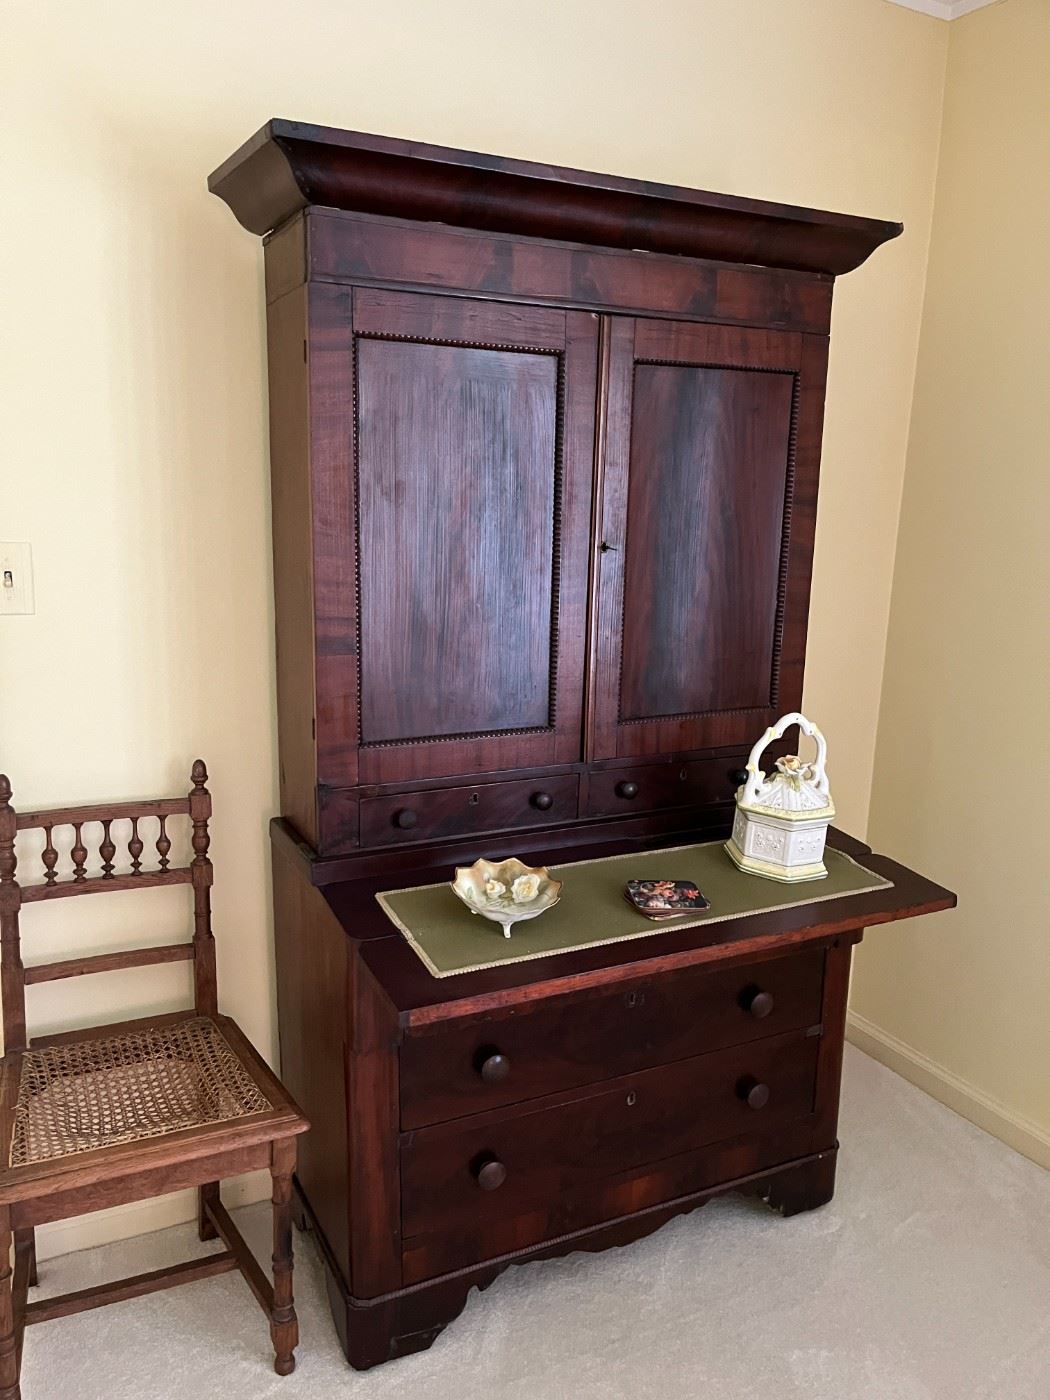 Antique mahogany Secretary/Bookcase (ca. 1840). Full description in "Details".  Bid item starting at $1,200.